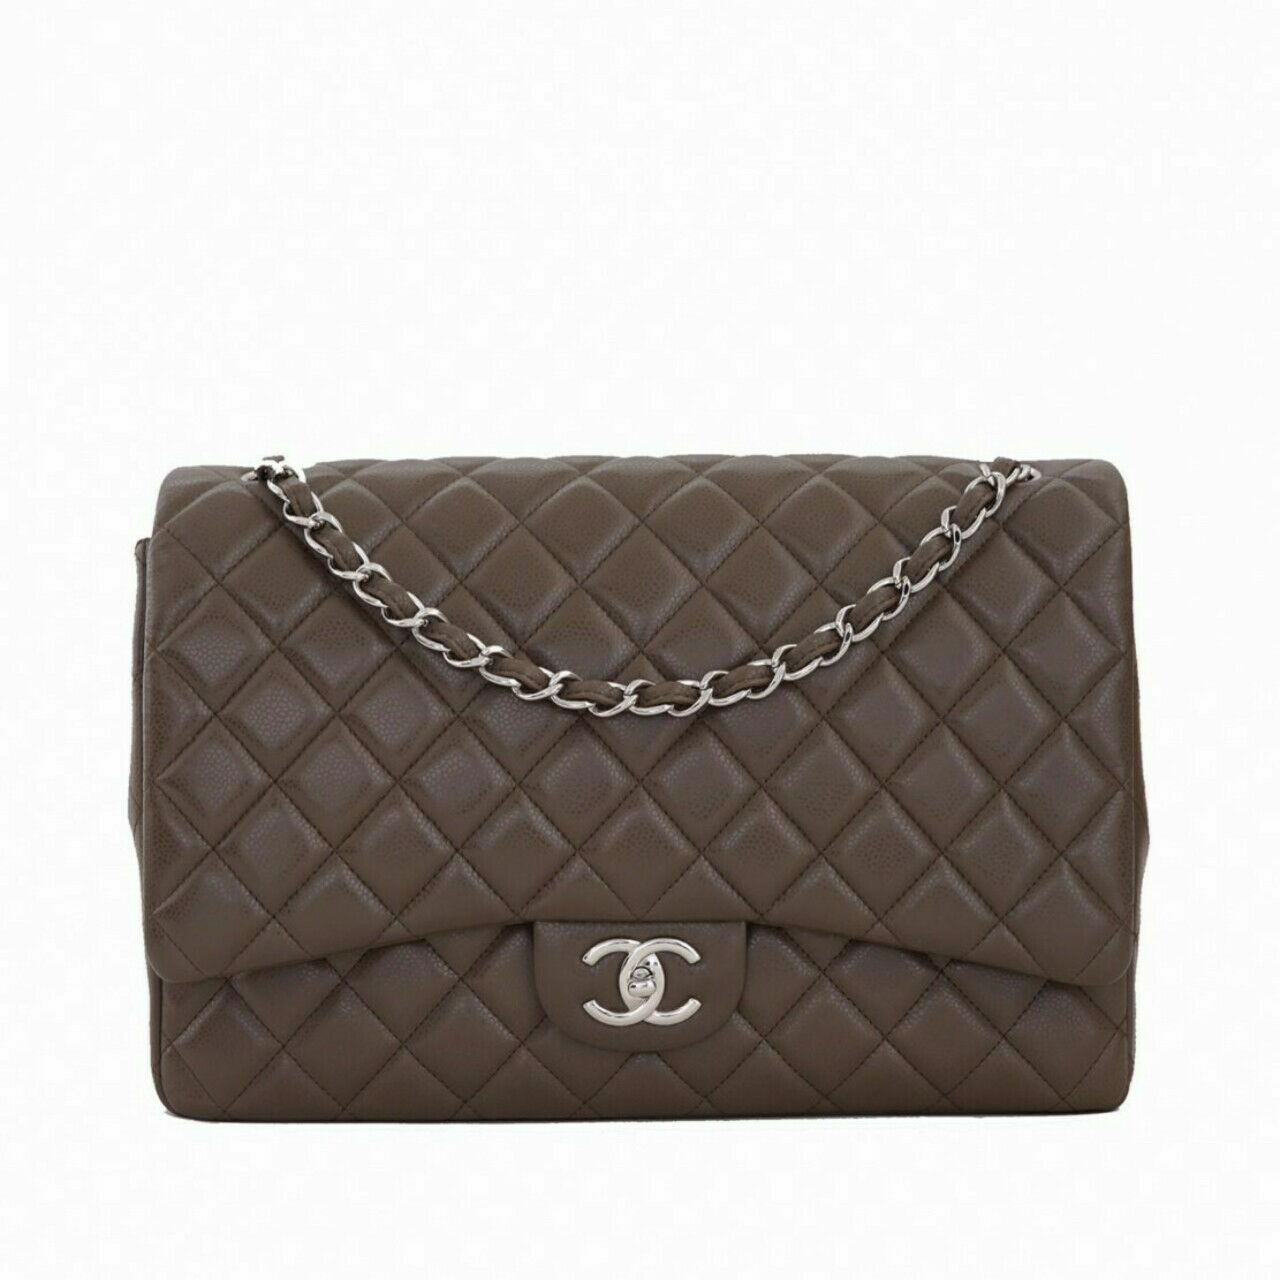 Chanel Coffee Shoulder Bag